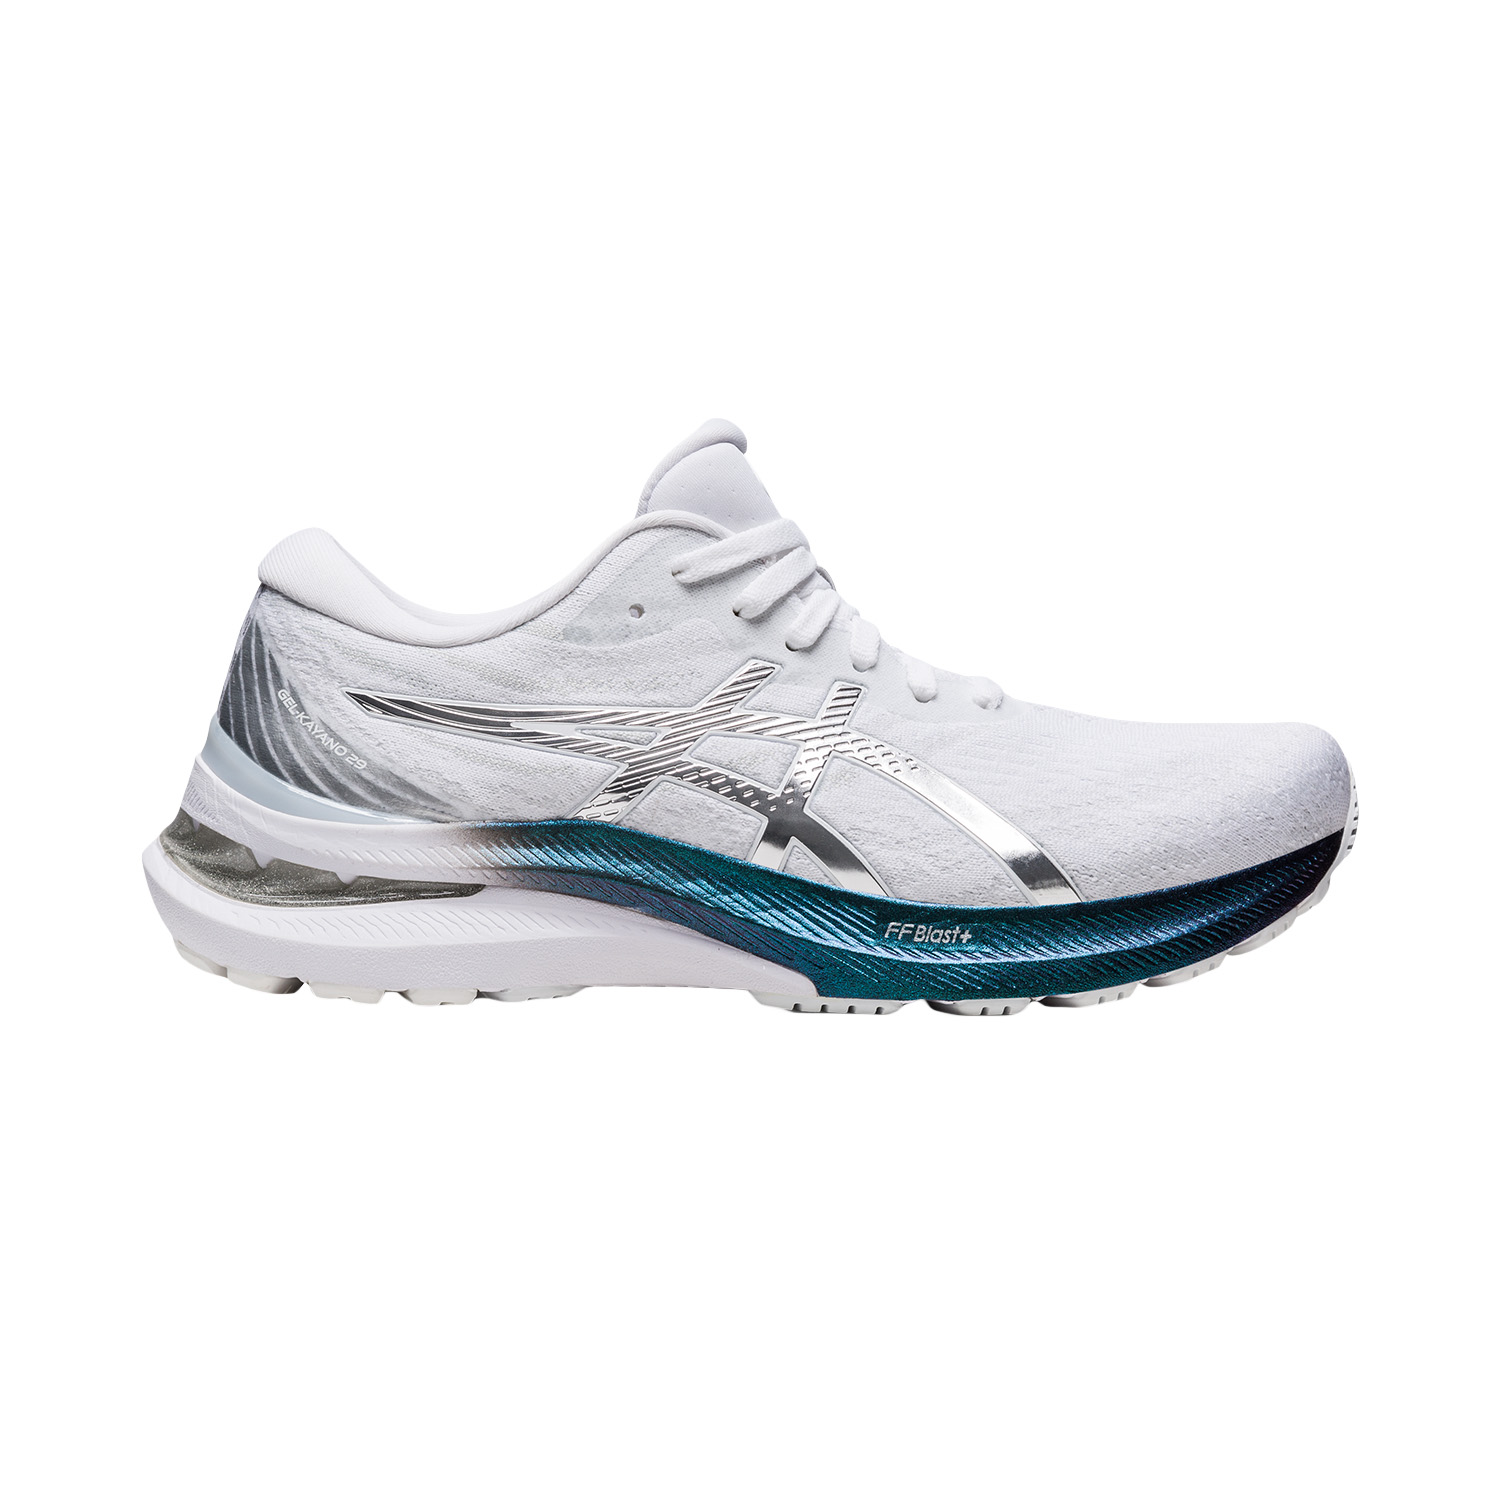 Asics Gel Kayano 29 Women's Running Shoes - White/Pure Silver